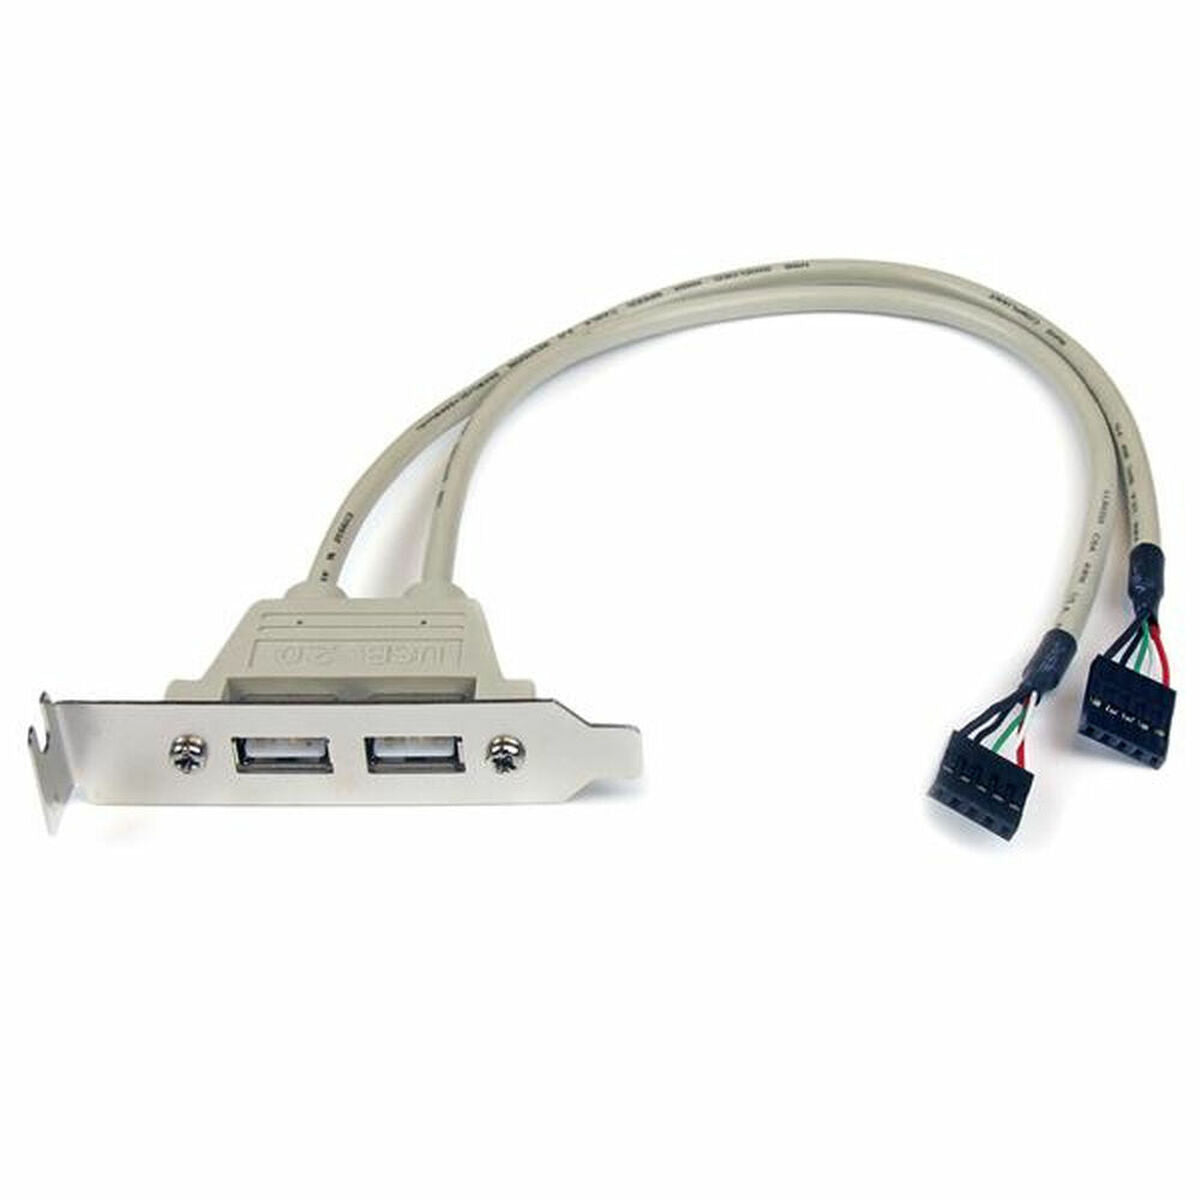 Hiditec USBPLATELP USB 2.0 RAID-Controllerkarte